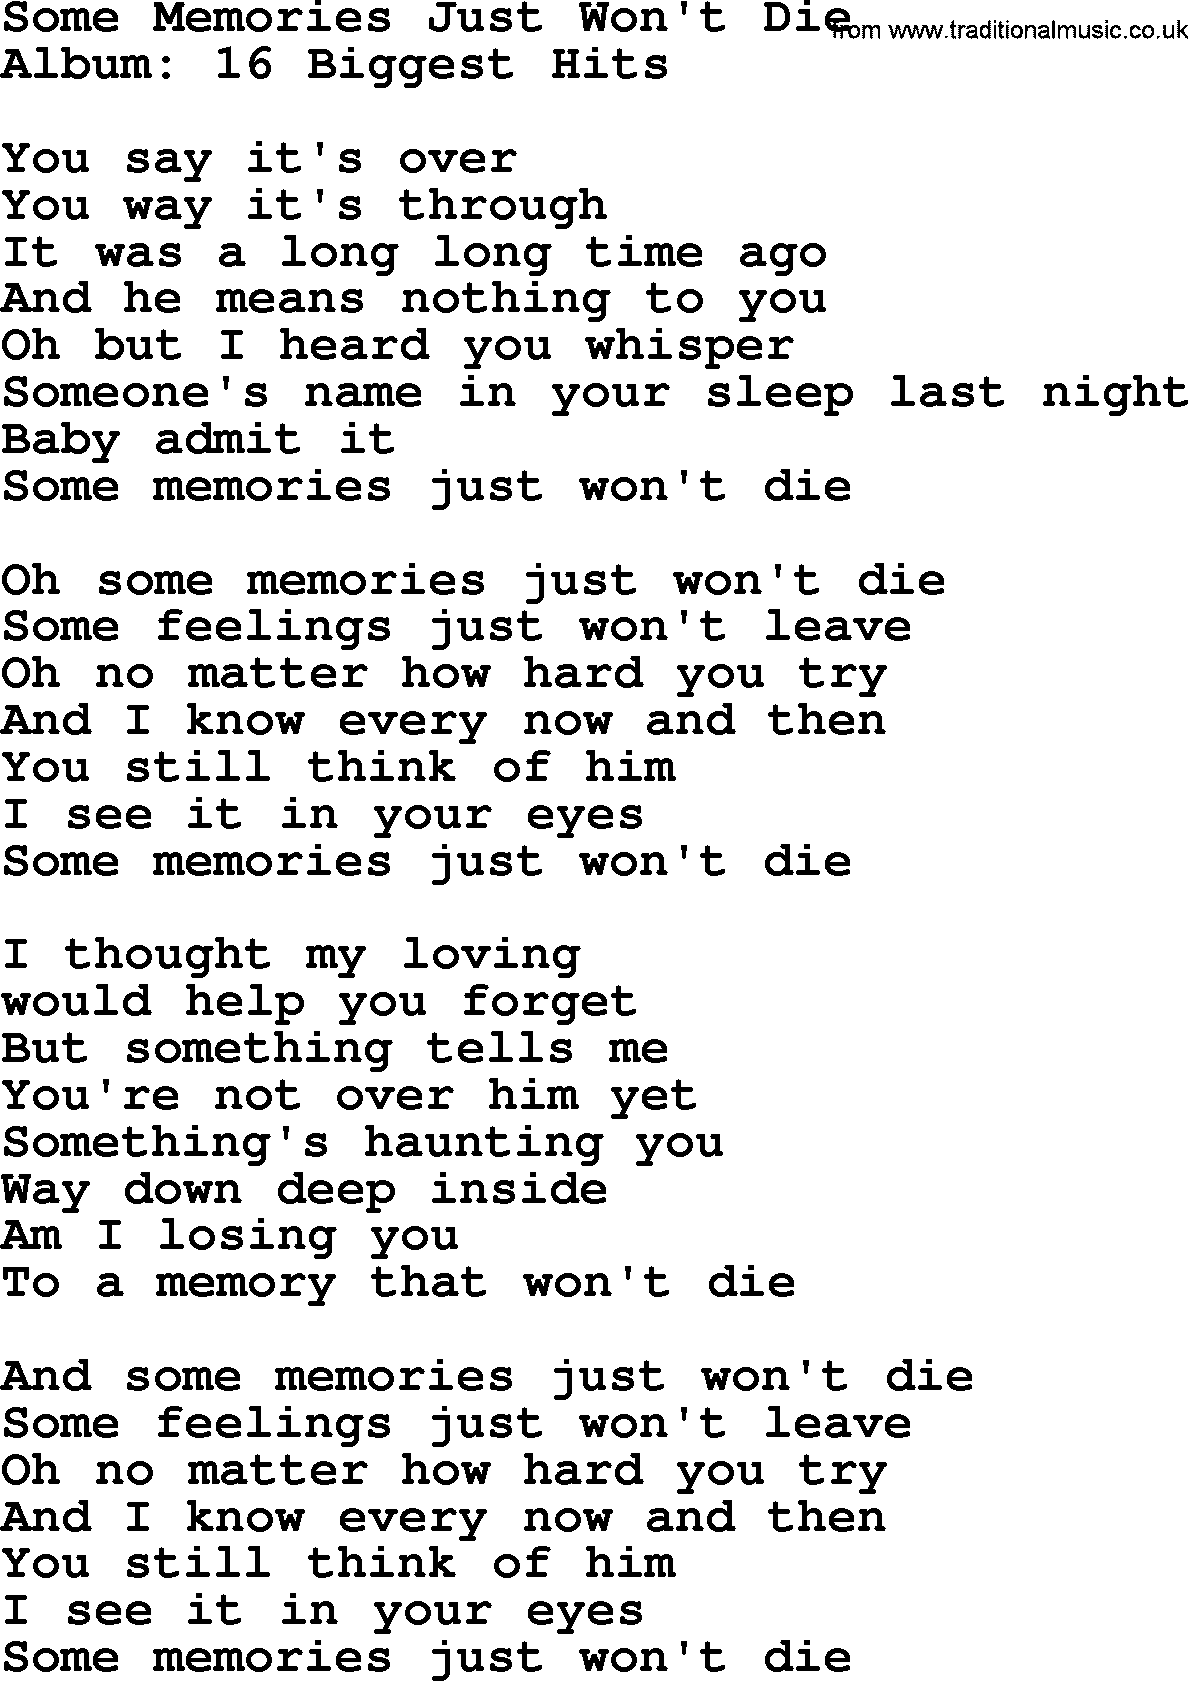 Marty Robbins song: Some Memories Just Wont Die, lyrics